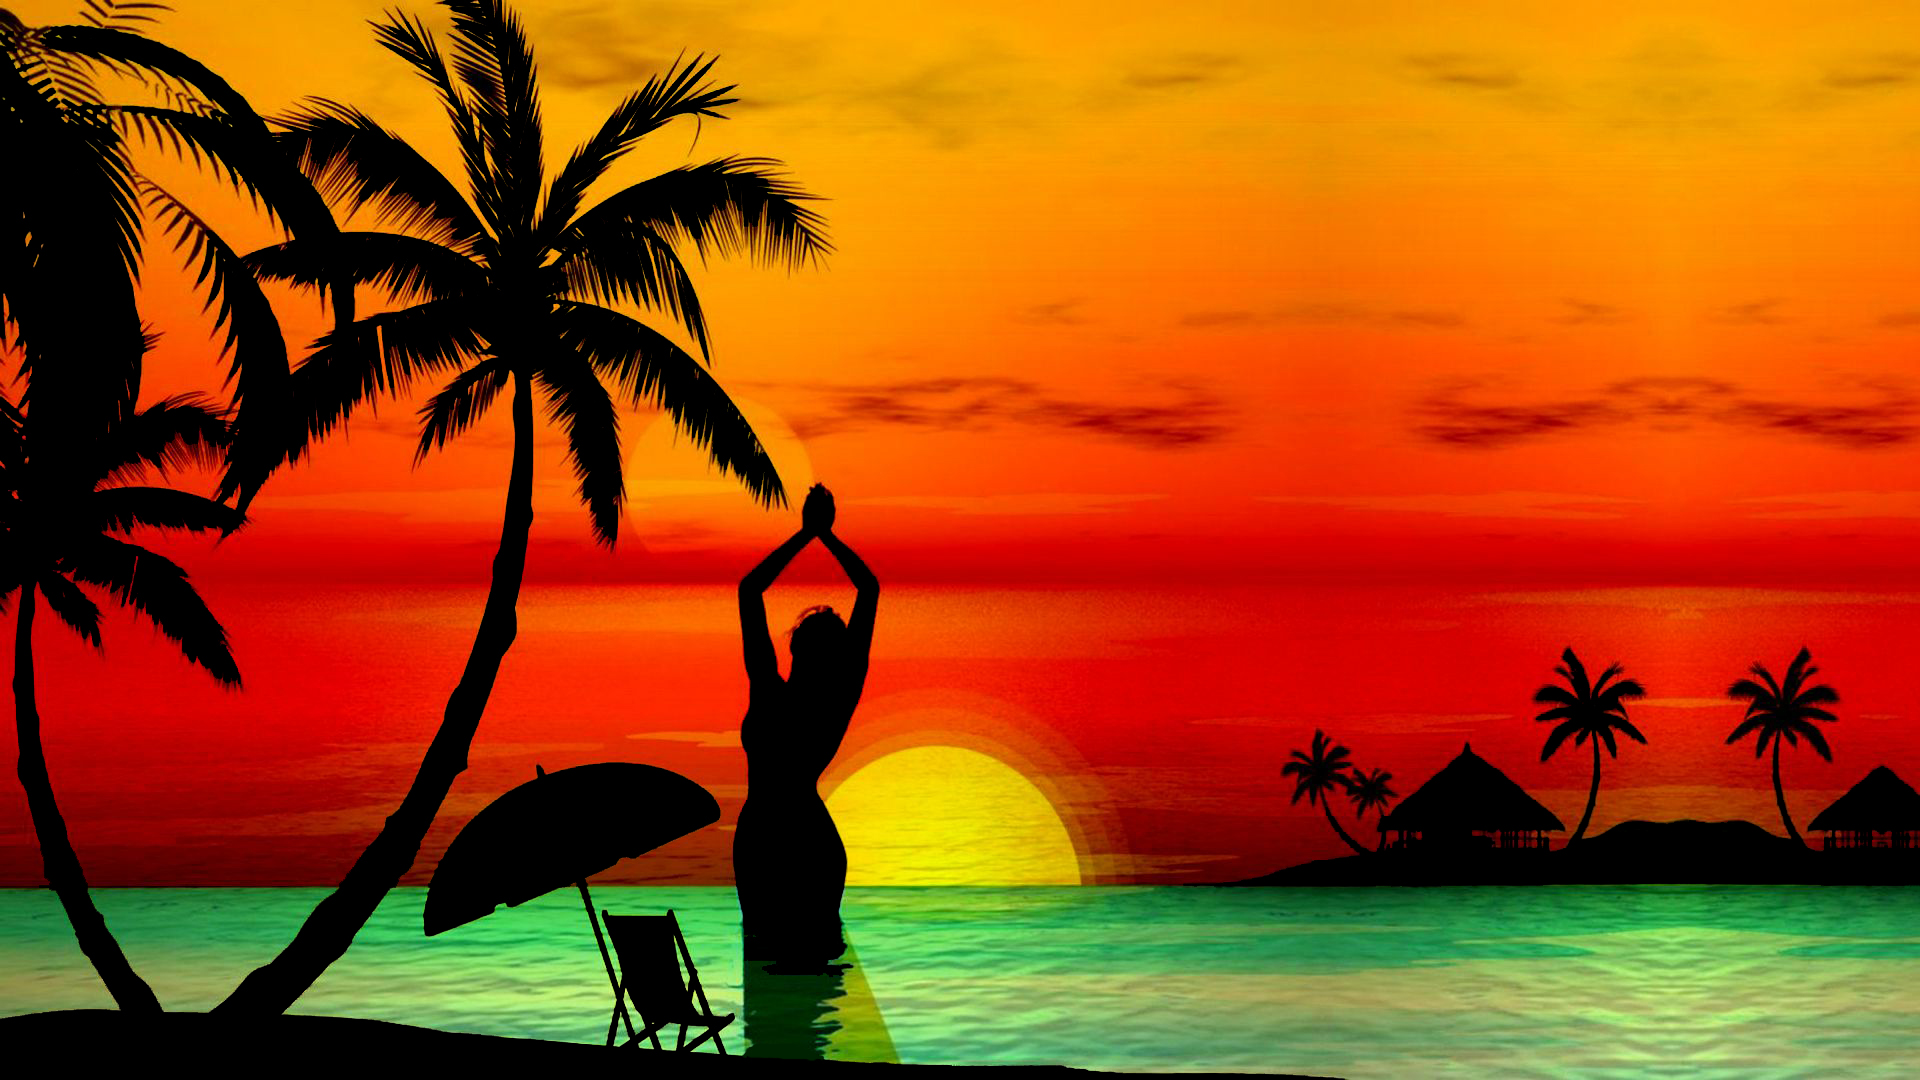 Free Download Sunset Beaches Backgrounds | PixelsTalk.Net